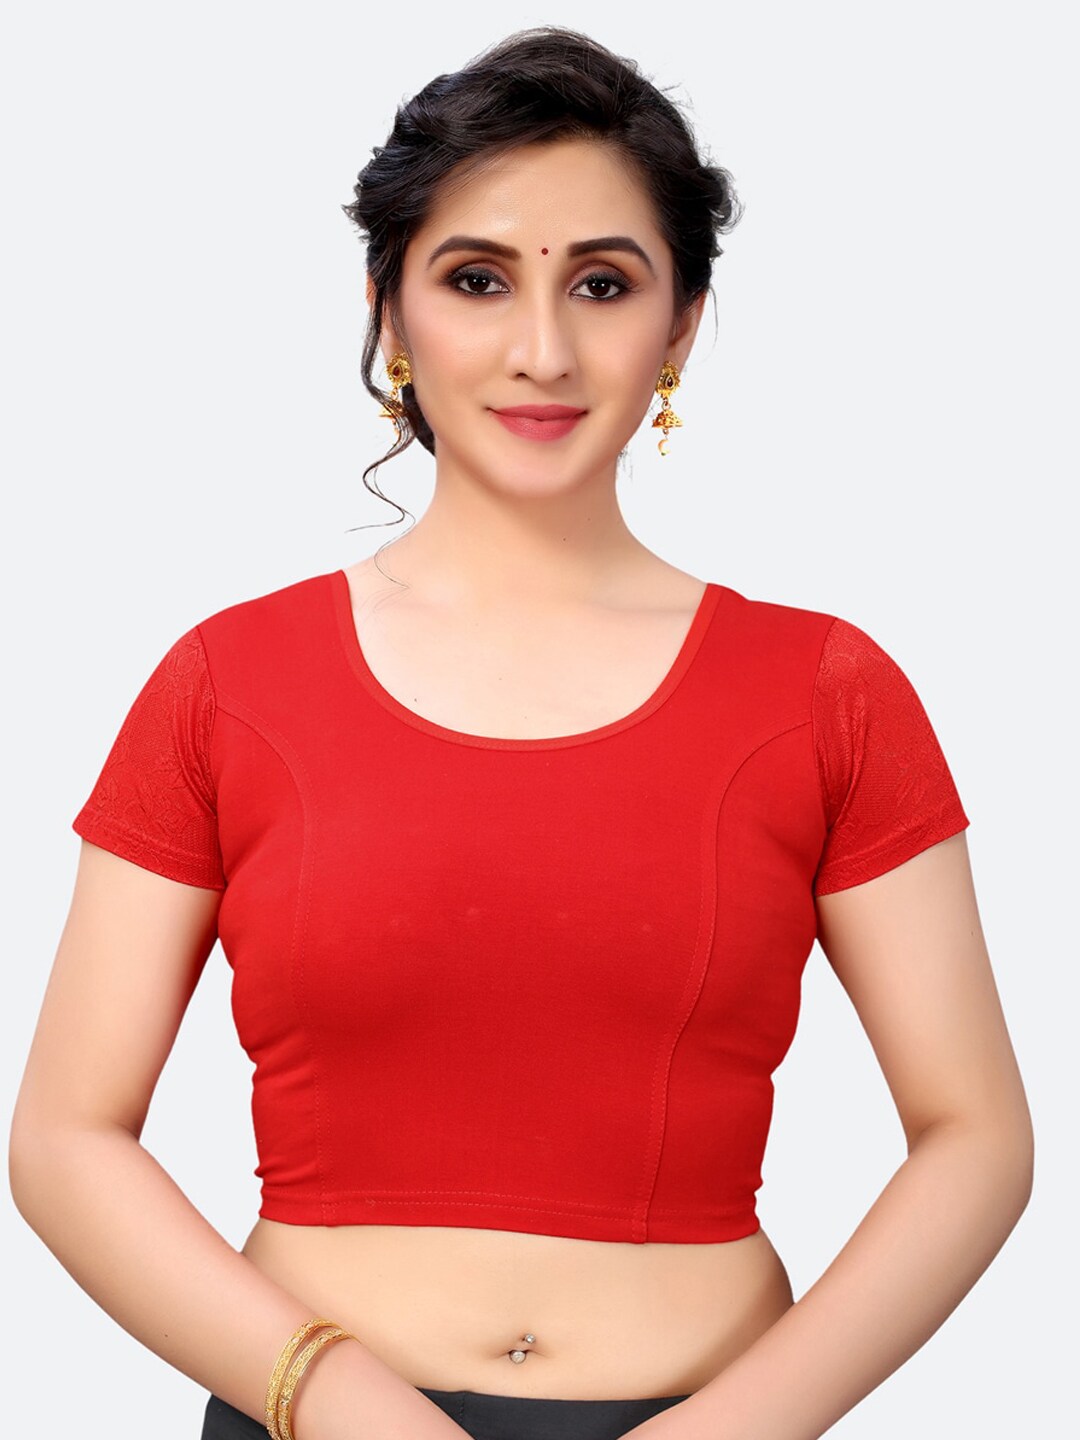 SIRIL Red Self Design Saree Blouse Price in India